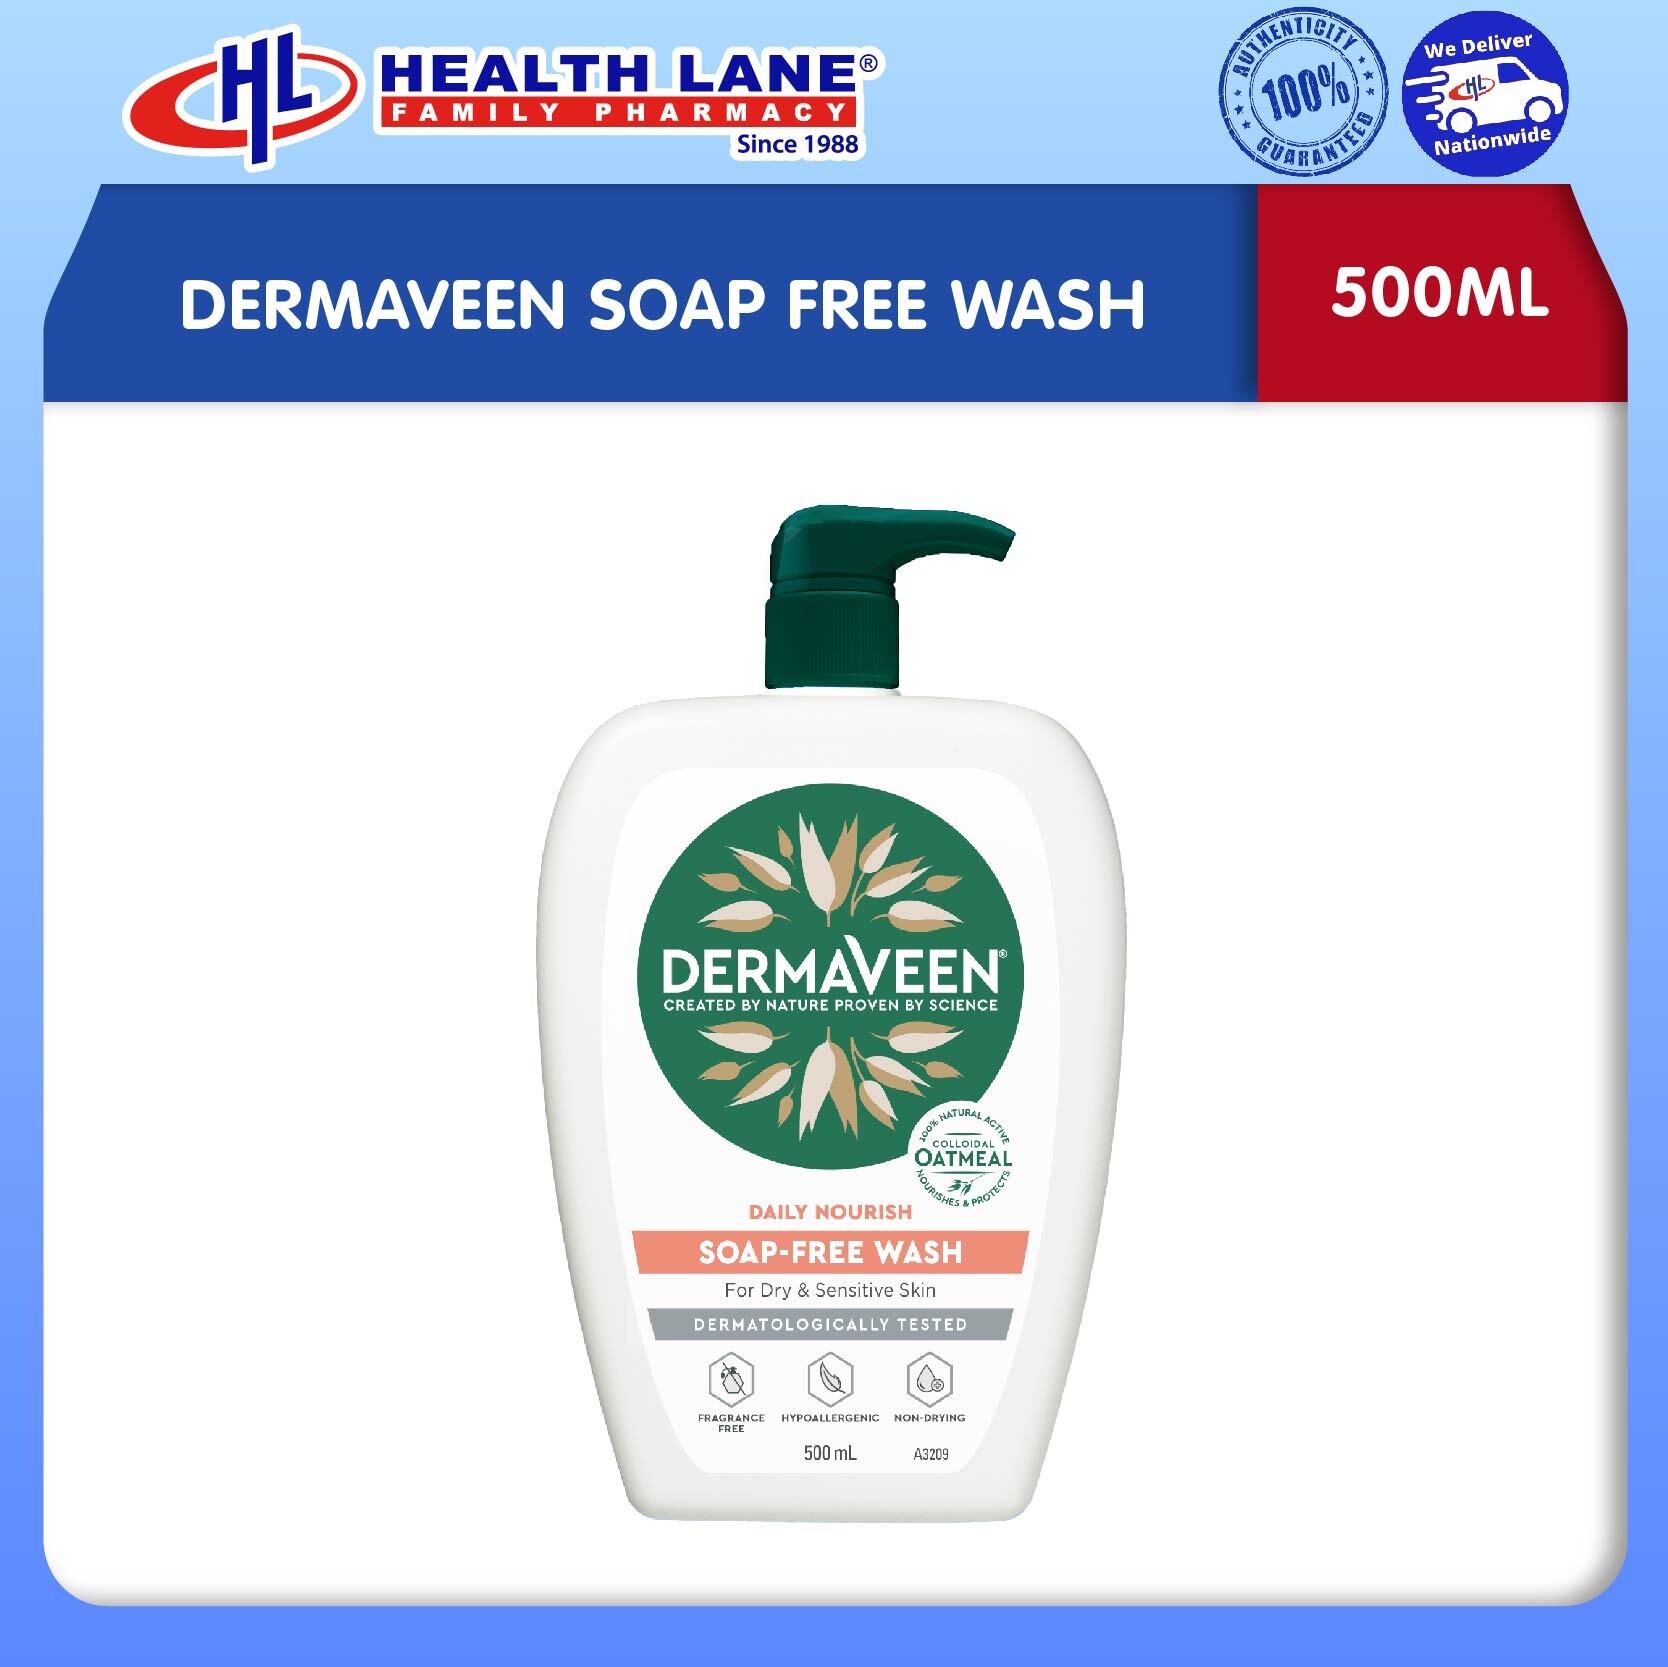 DERMAVEEN SOAP FREE WASH (500ML)